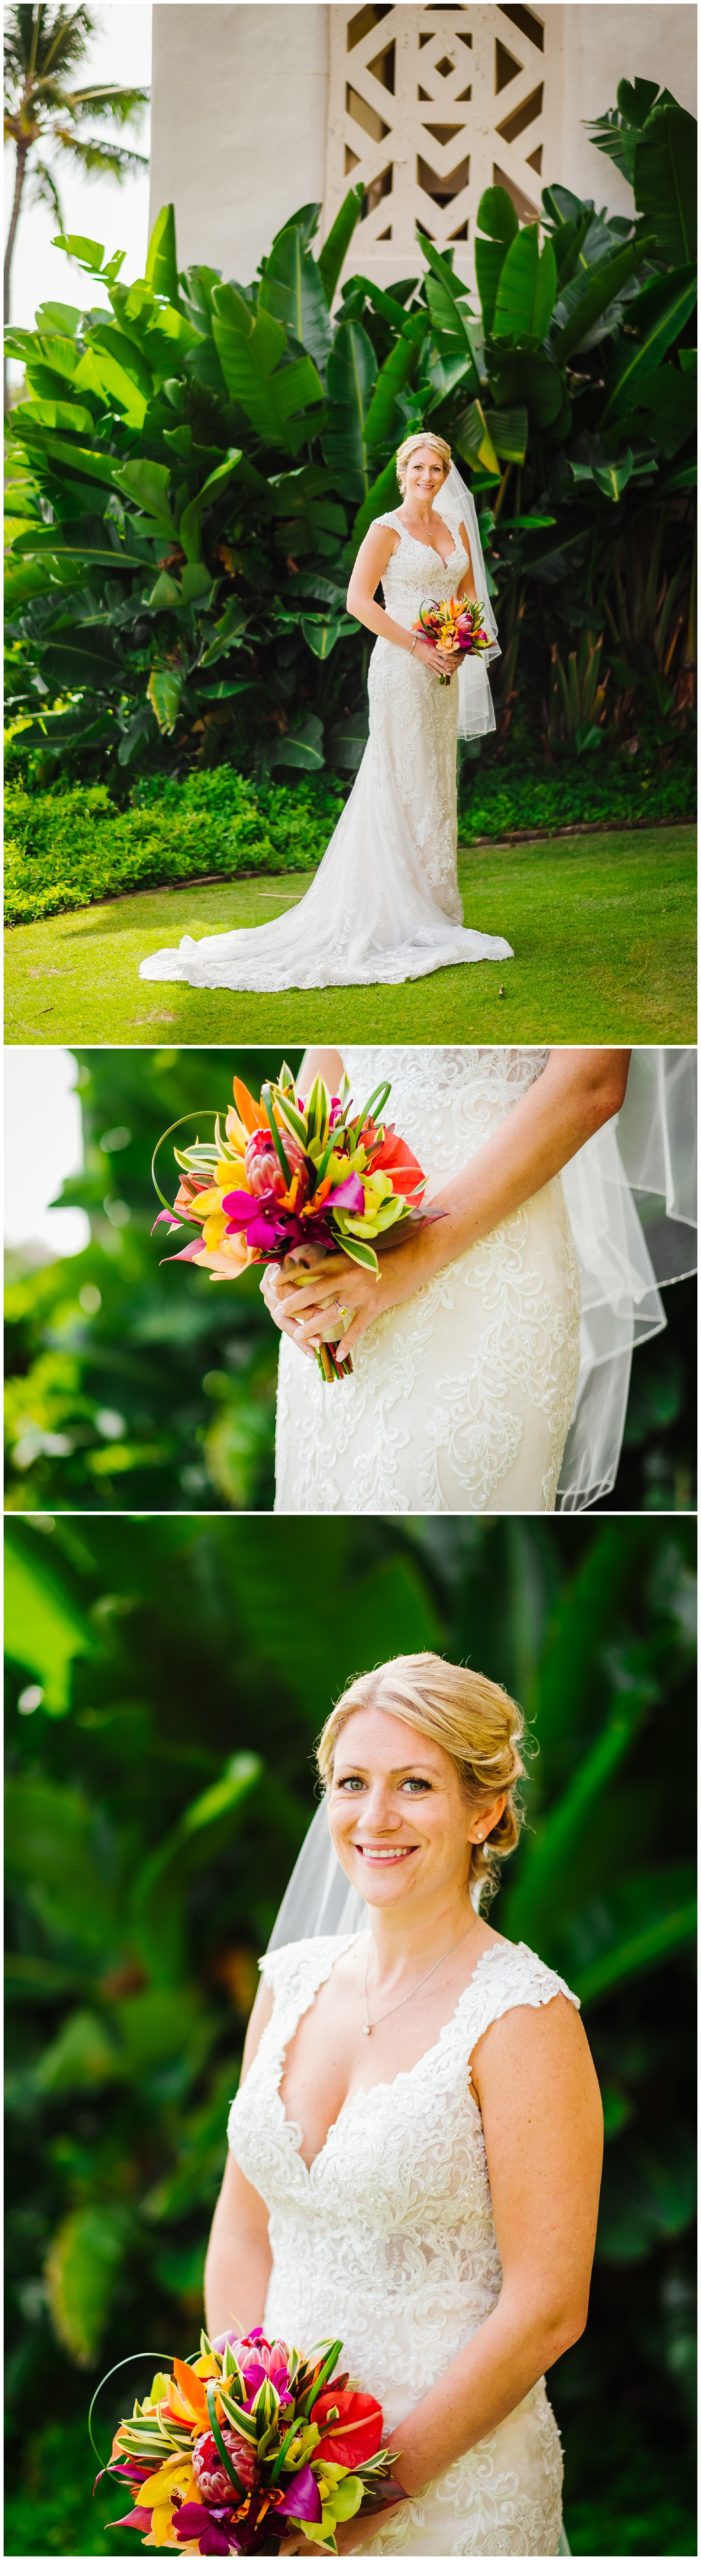 destination-wedding-hawaii-kauai-grand-hyatt-resort-napali-coast-sail_0056.jpg